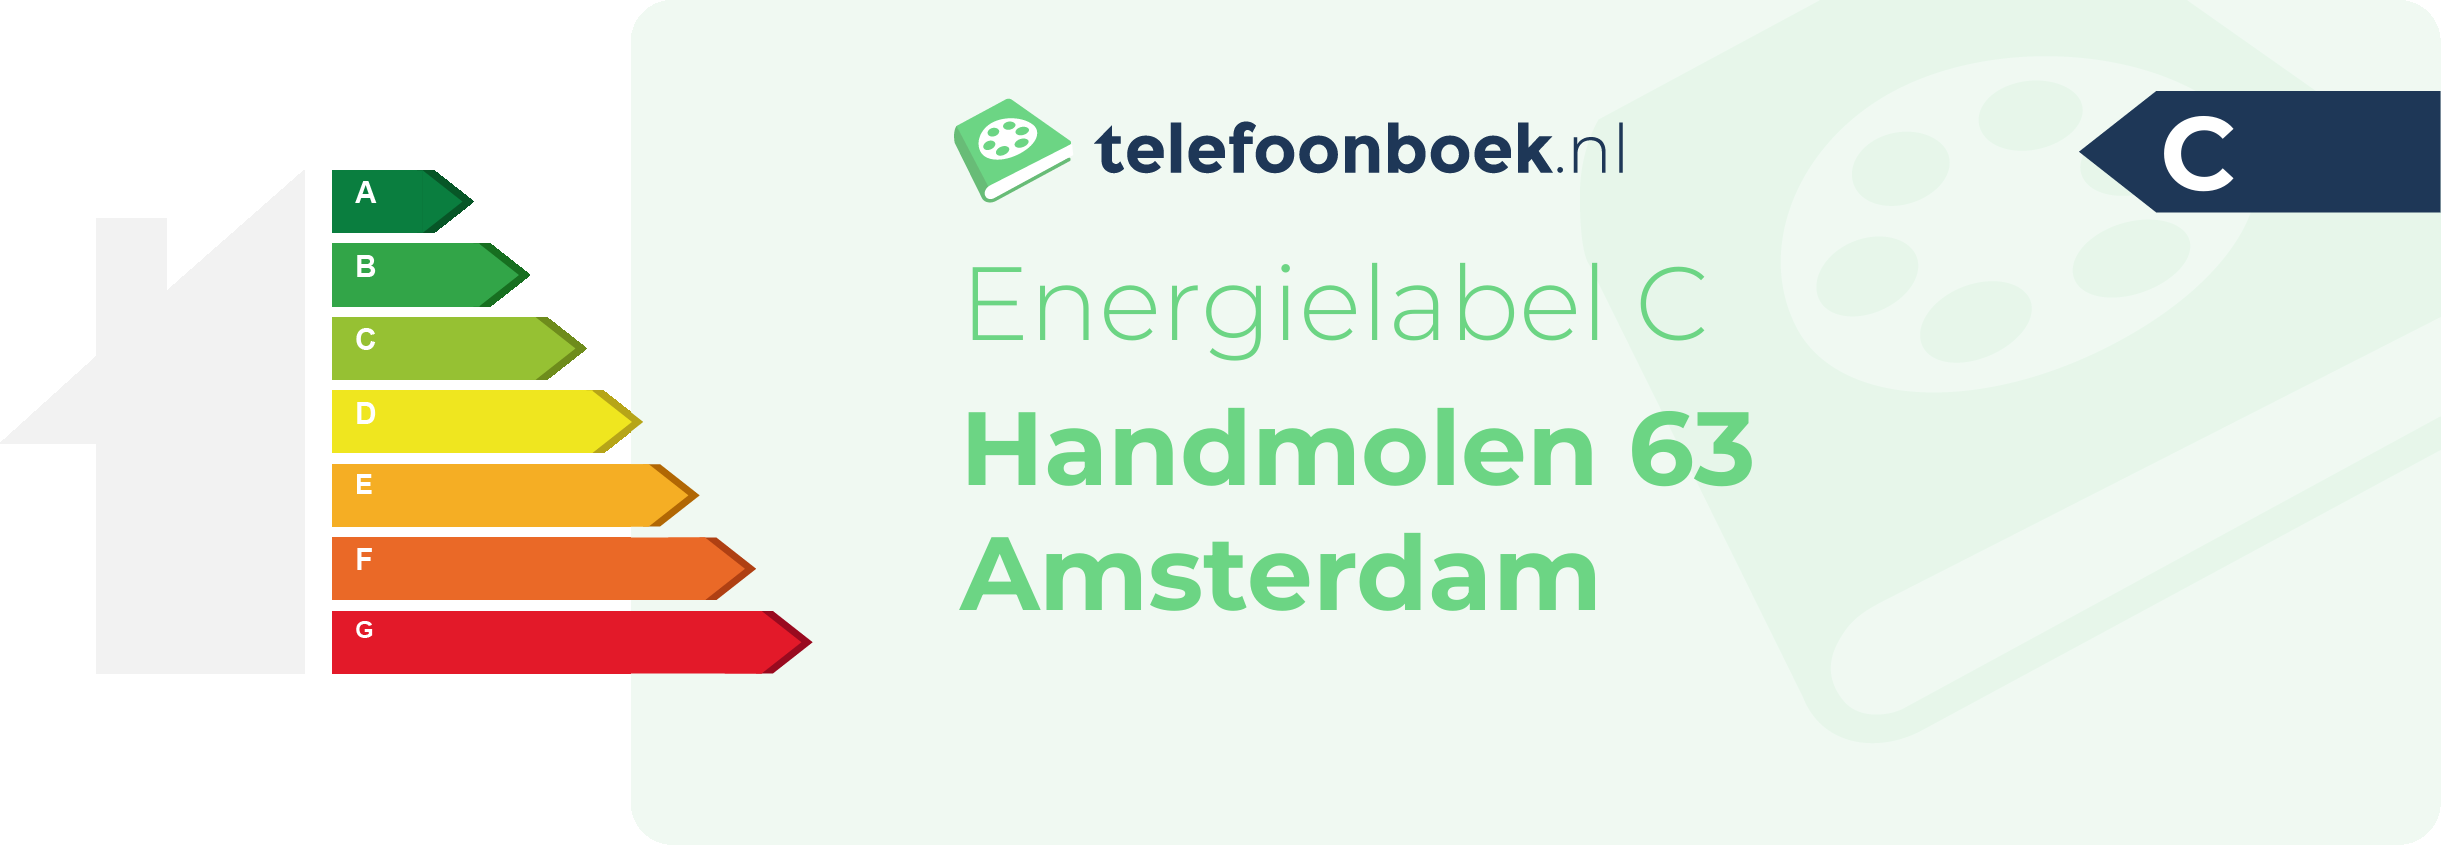 Energielabel Handmolen 63 Amsterdam